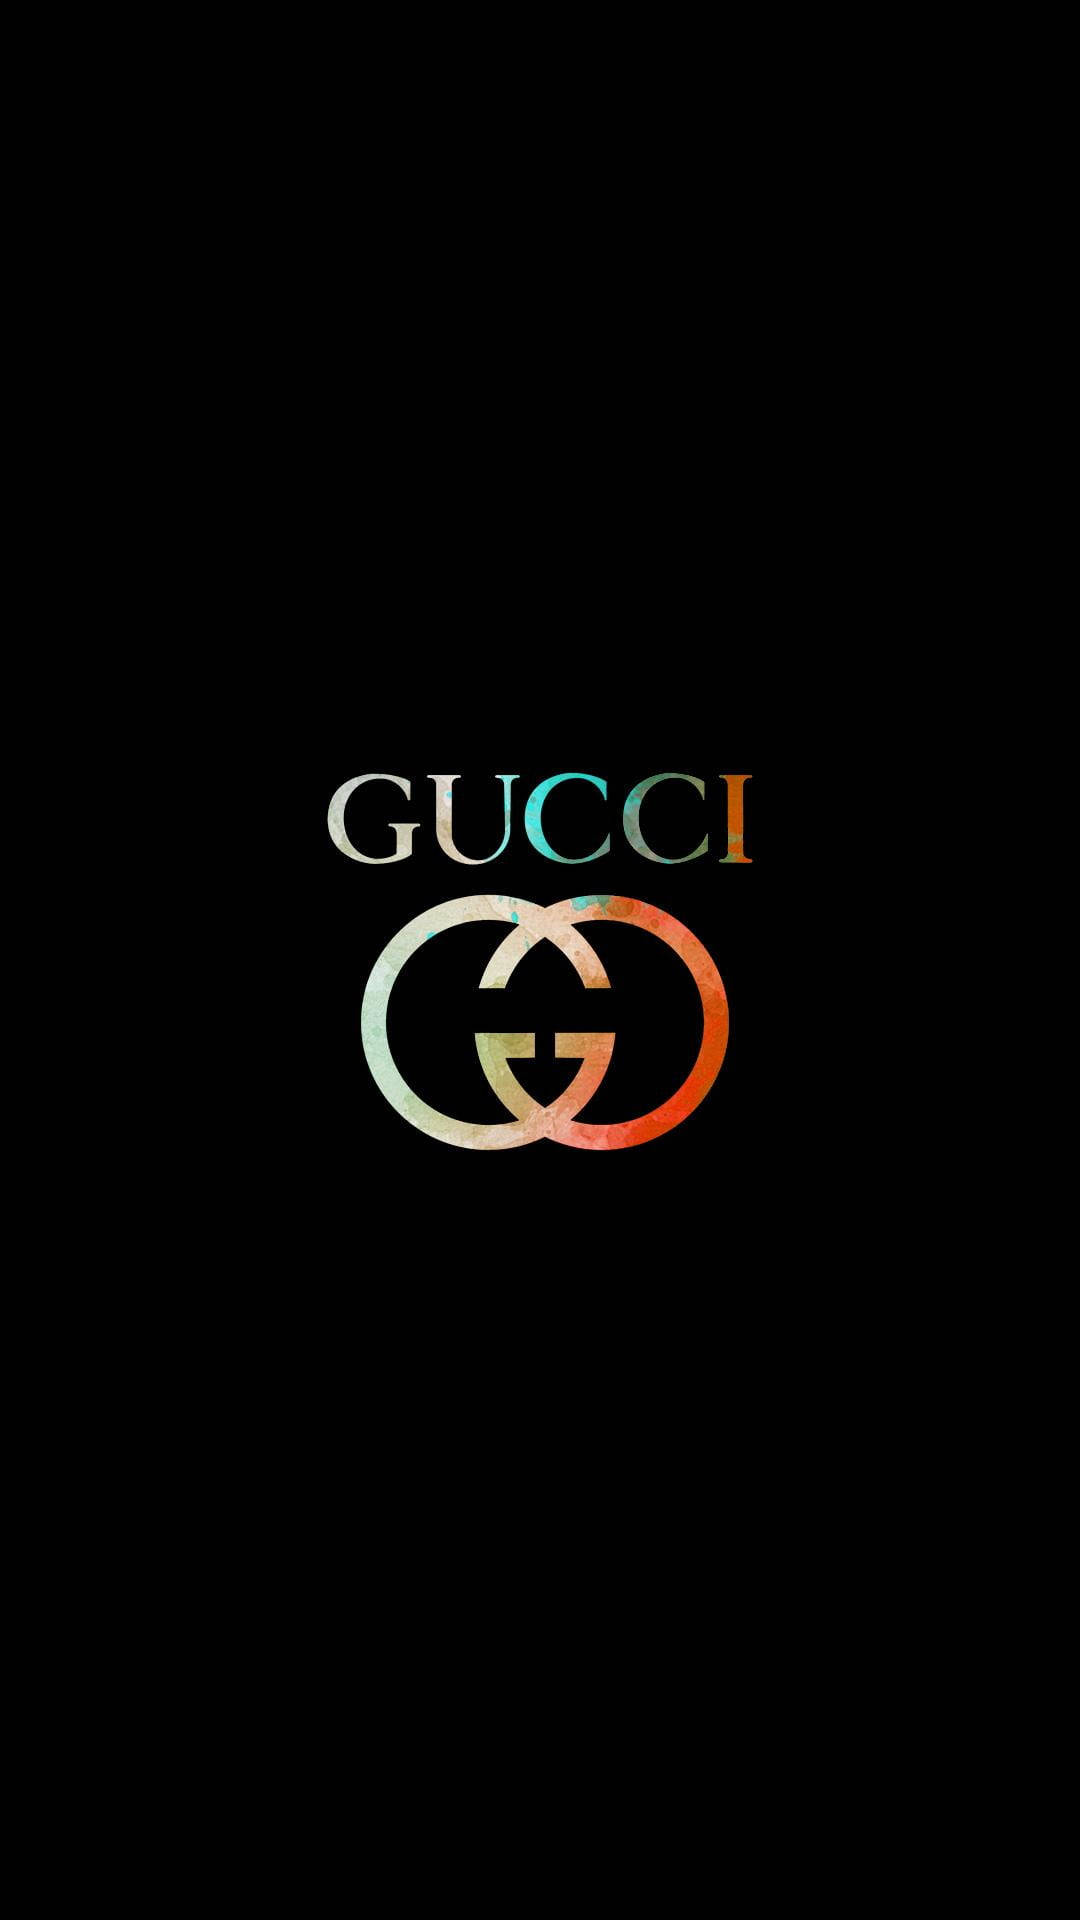 Free Gucci Iphone Wallpaper Downloads, [100+] Gucci Iphone Wallpapers for  FREE | Wallpapers.com